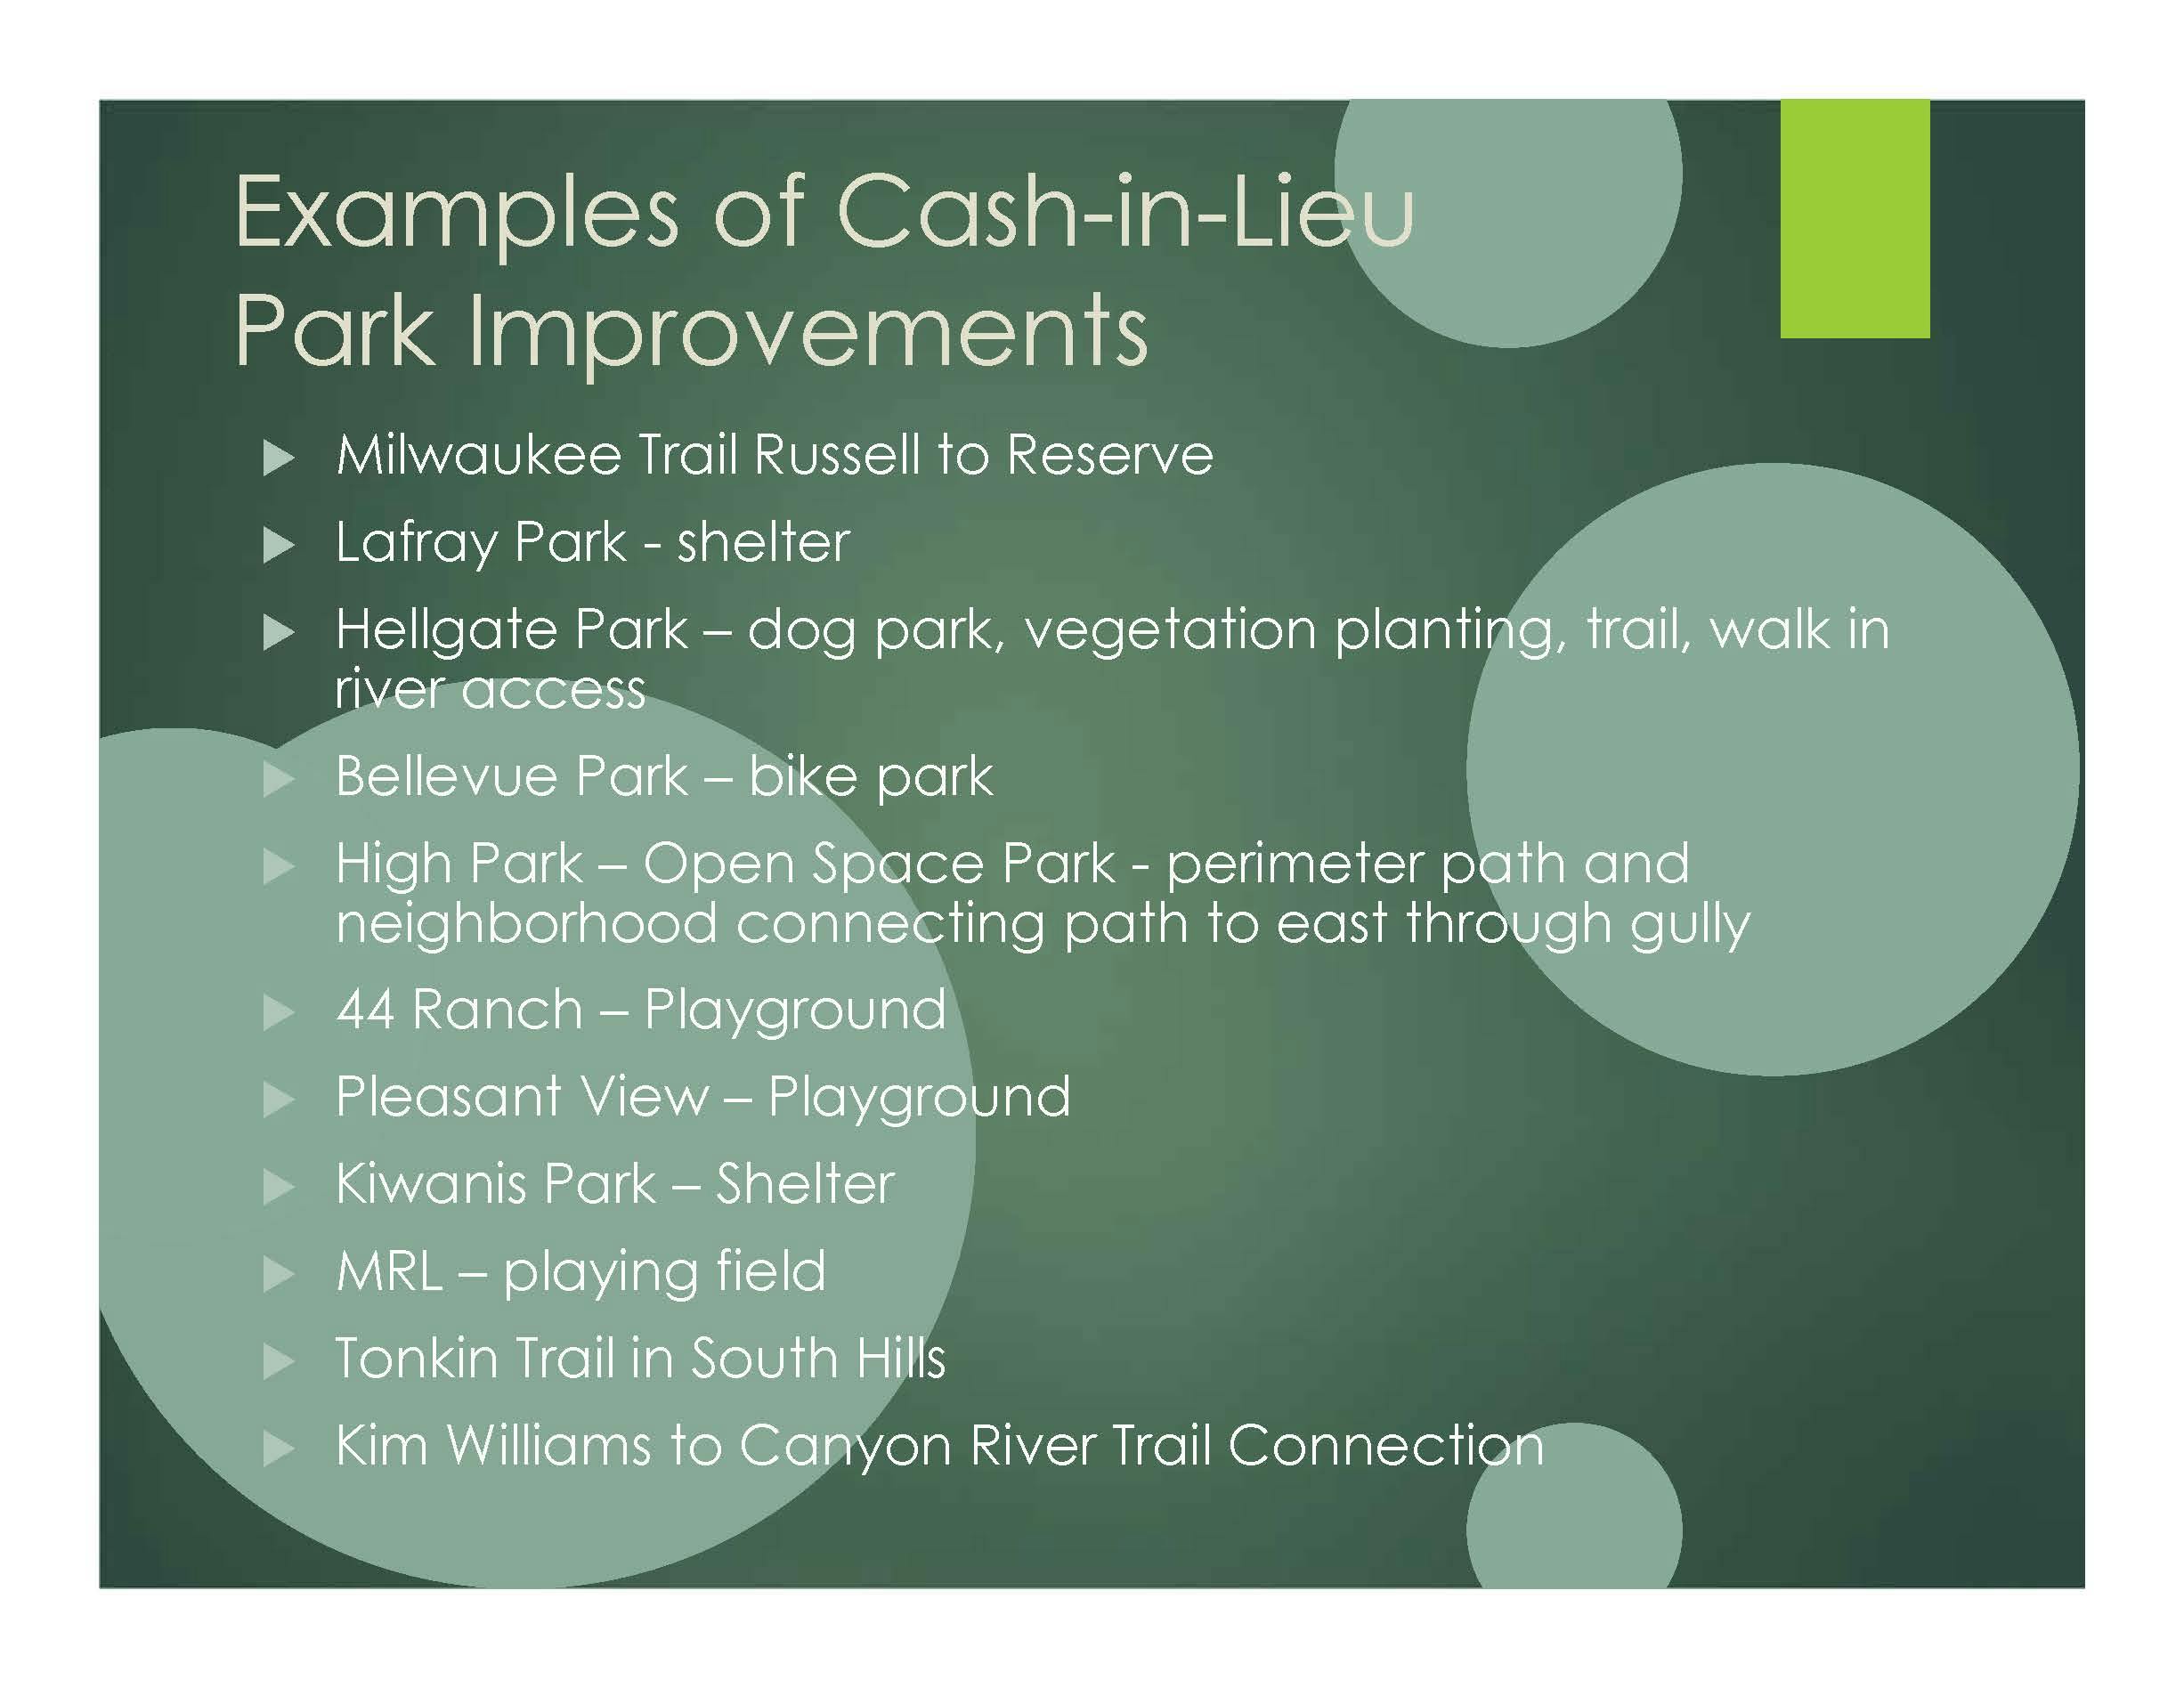 Examples of CIL Park improvments.jpg